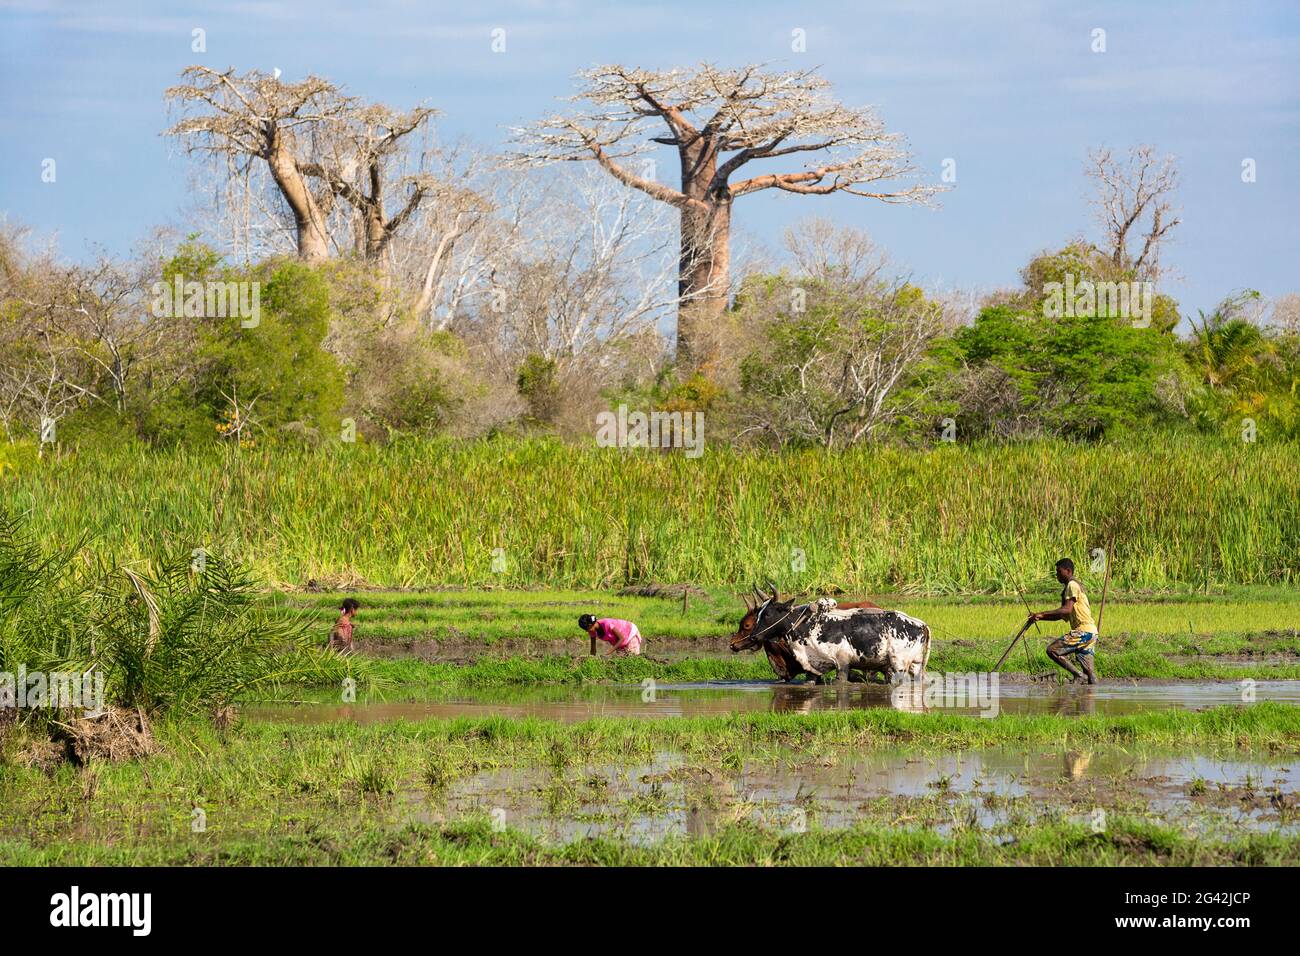 Farmer plows rice field near Morondava, baobabs, Adansonia grandidieri, Madagascar, Africa Stock Photo